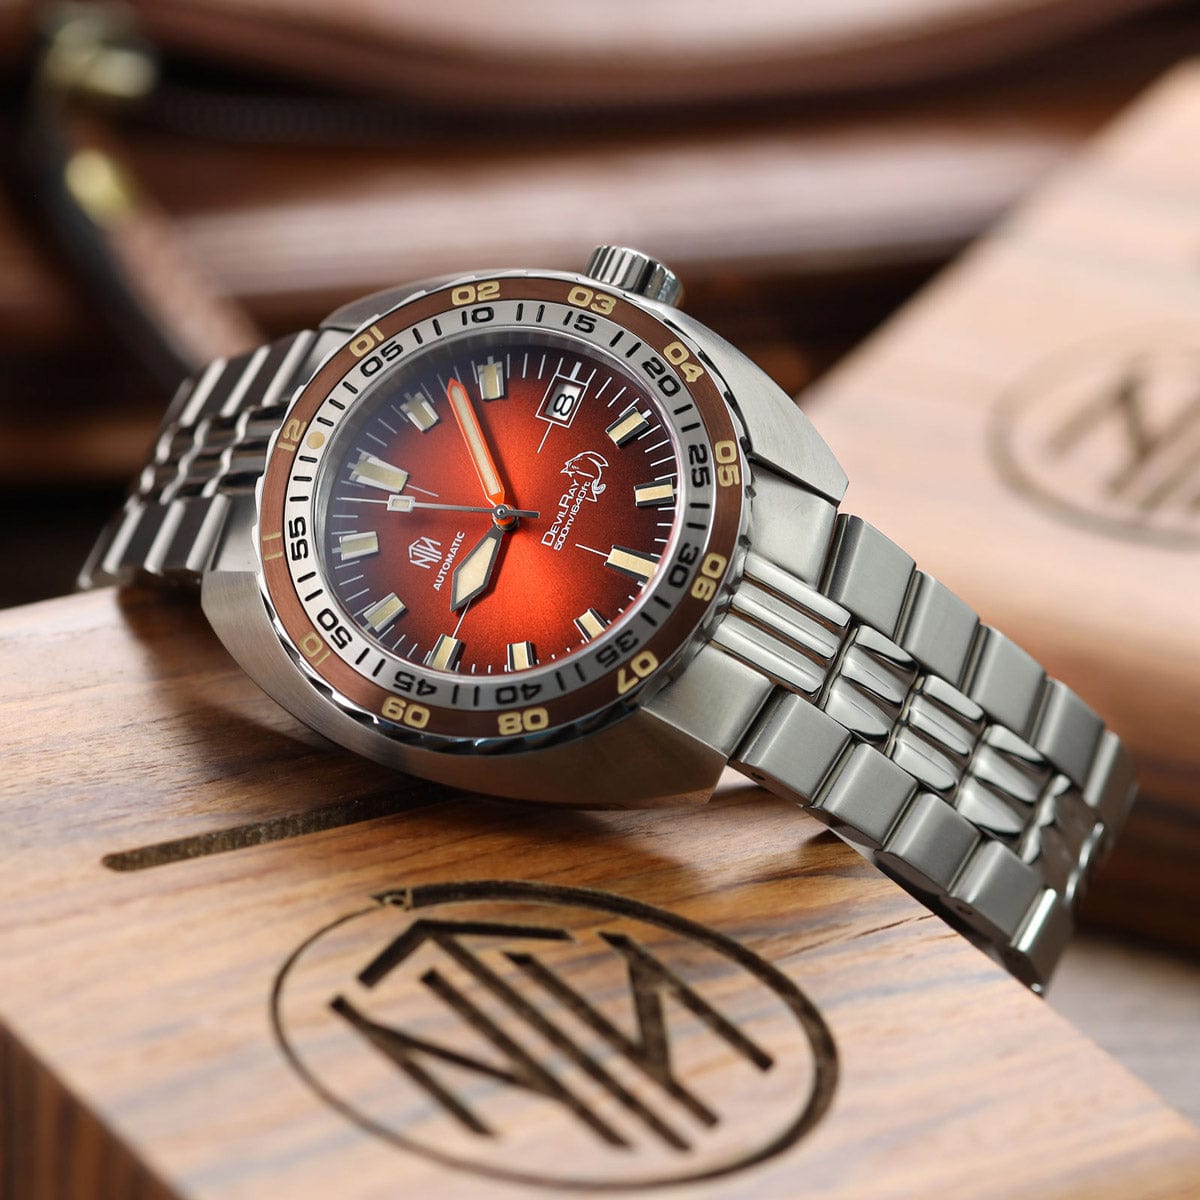 NTH DevilRay Dive Watch - Vintage Orange - WatchGecko Exclusive - NEARLY NEW